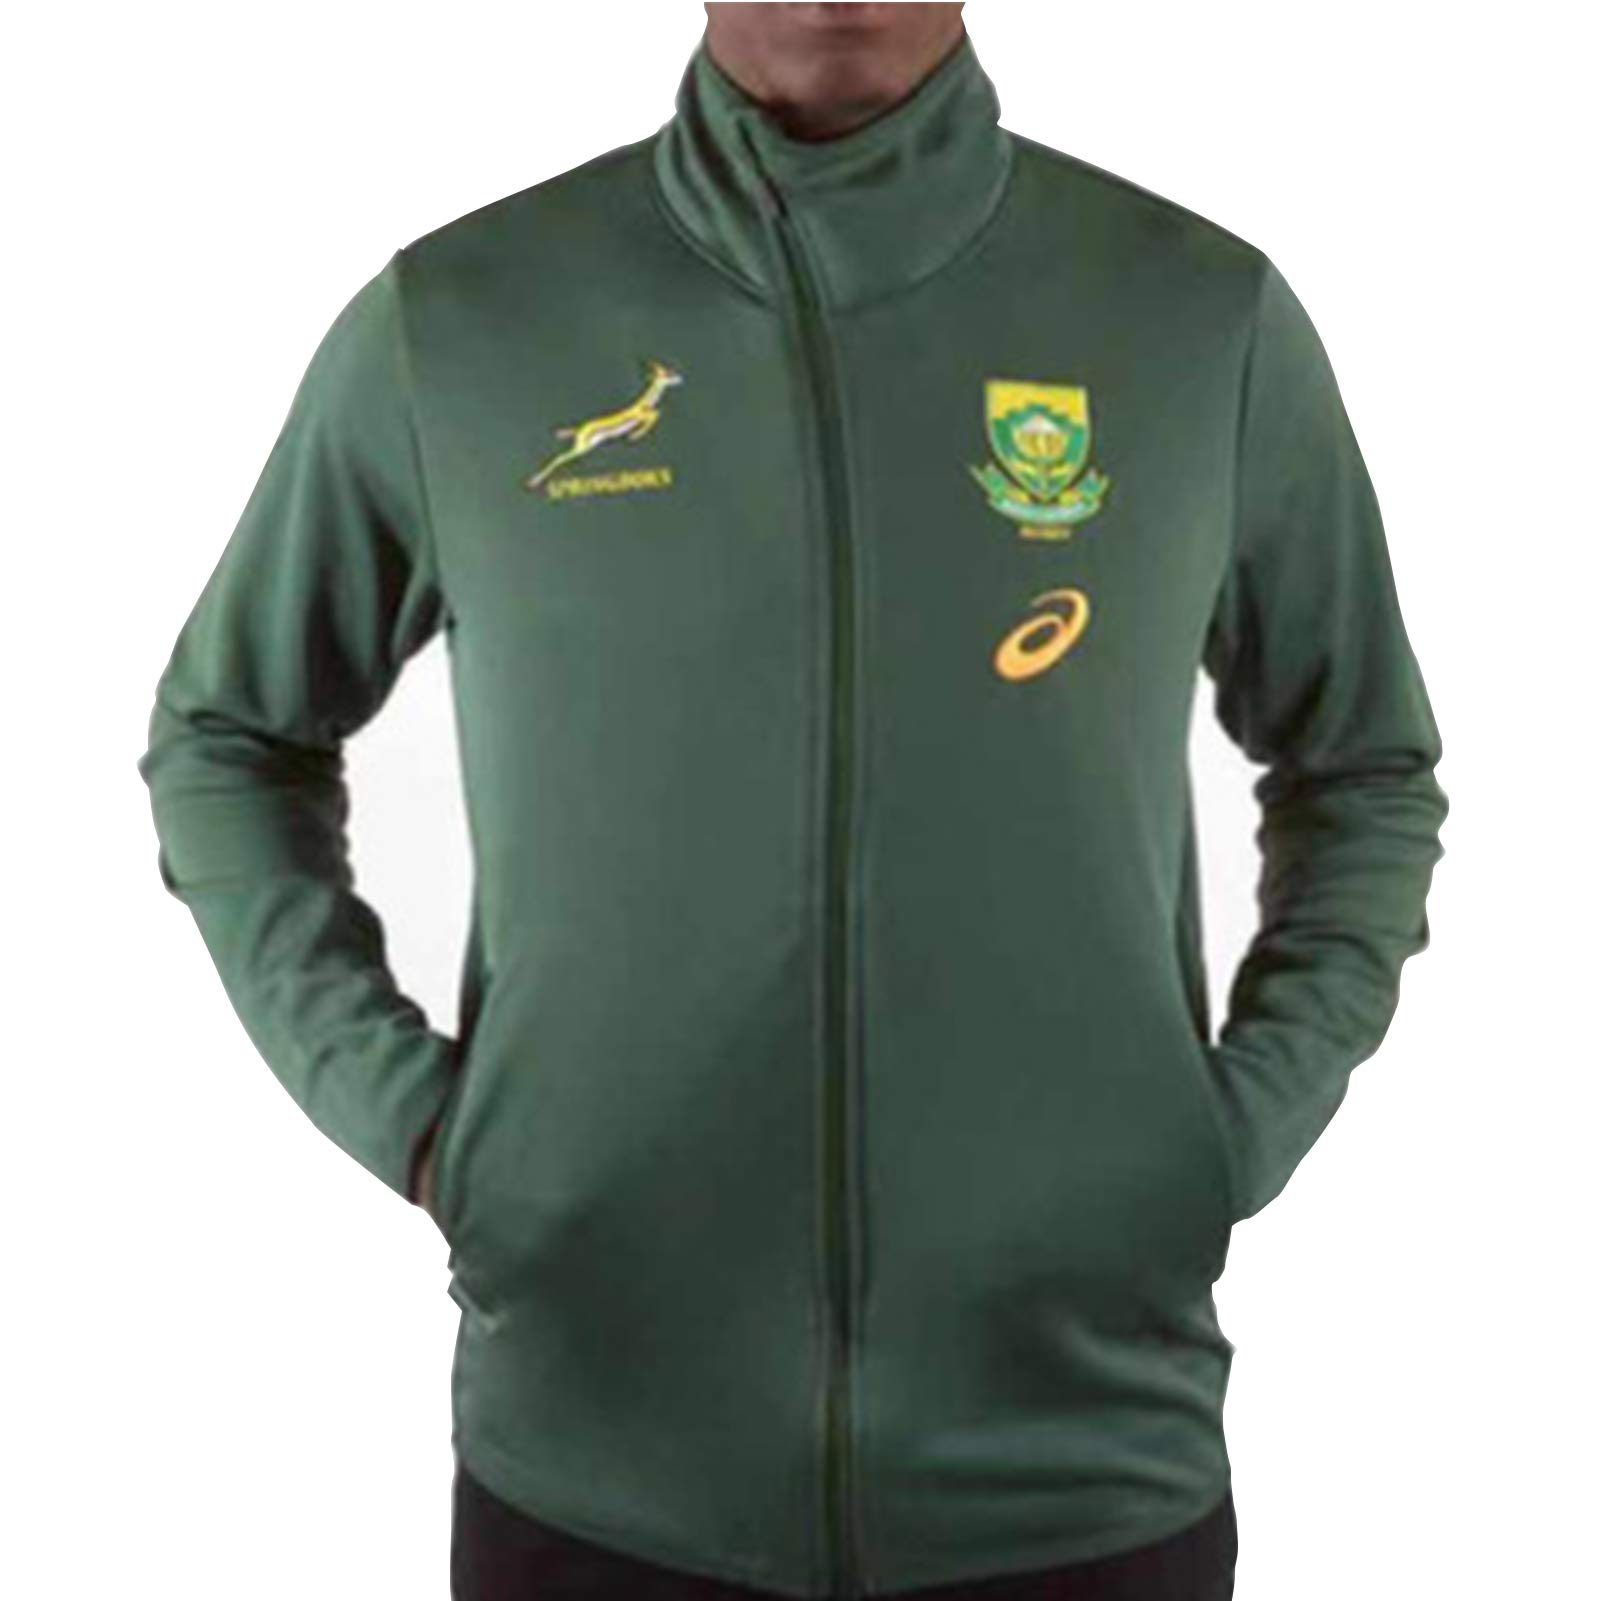 YINTE 2018 Südafrika Springboks Rugby Jersey, Weltcup-Jacke Football Training Anzug Trainingsanzüge, Herbst Und Winter Langarm Sweater Anzug Green-L